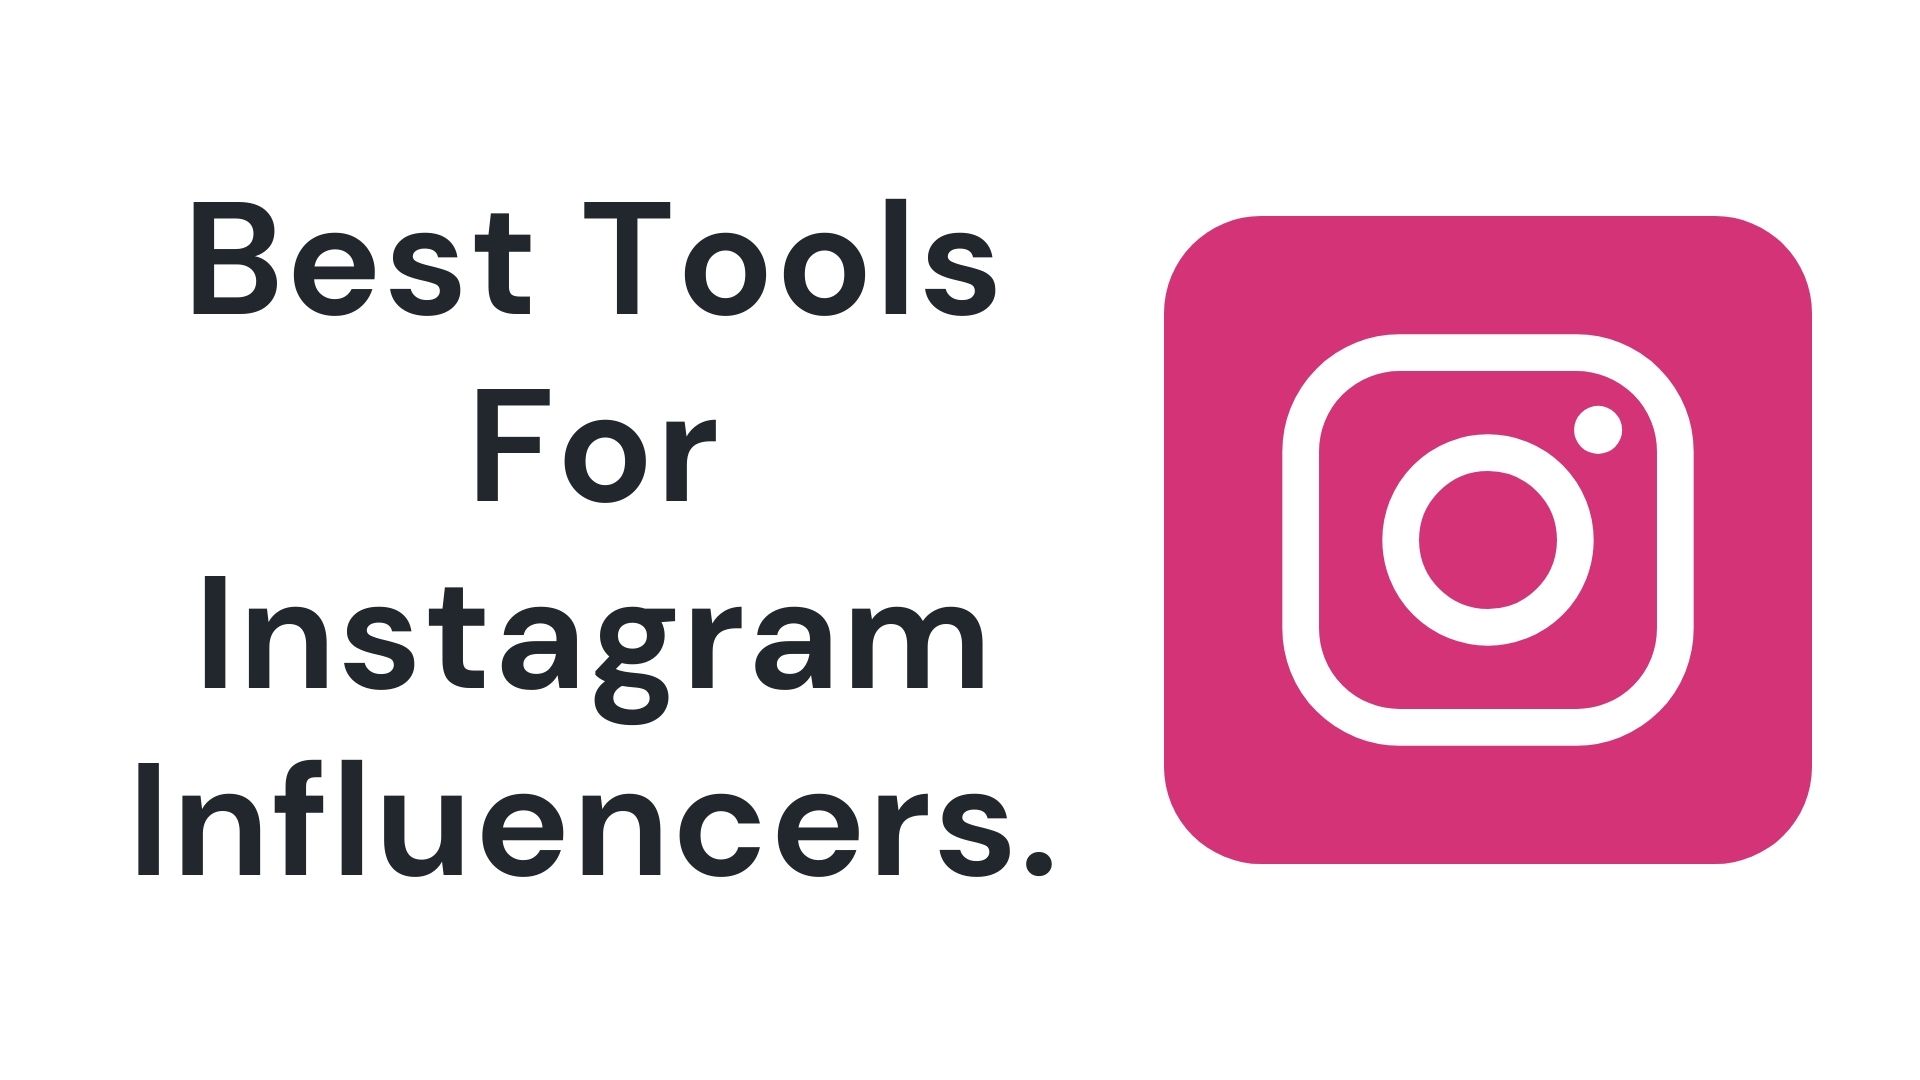 Best tools for Instagram influencers.